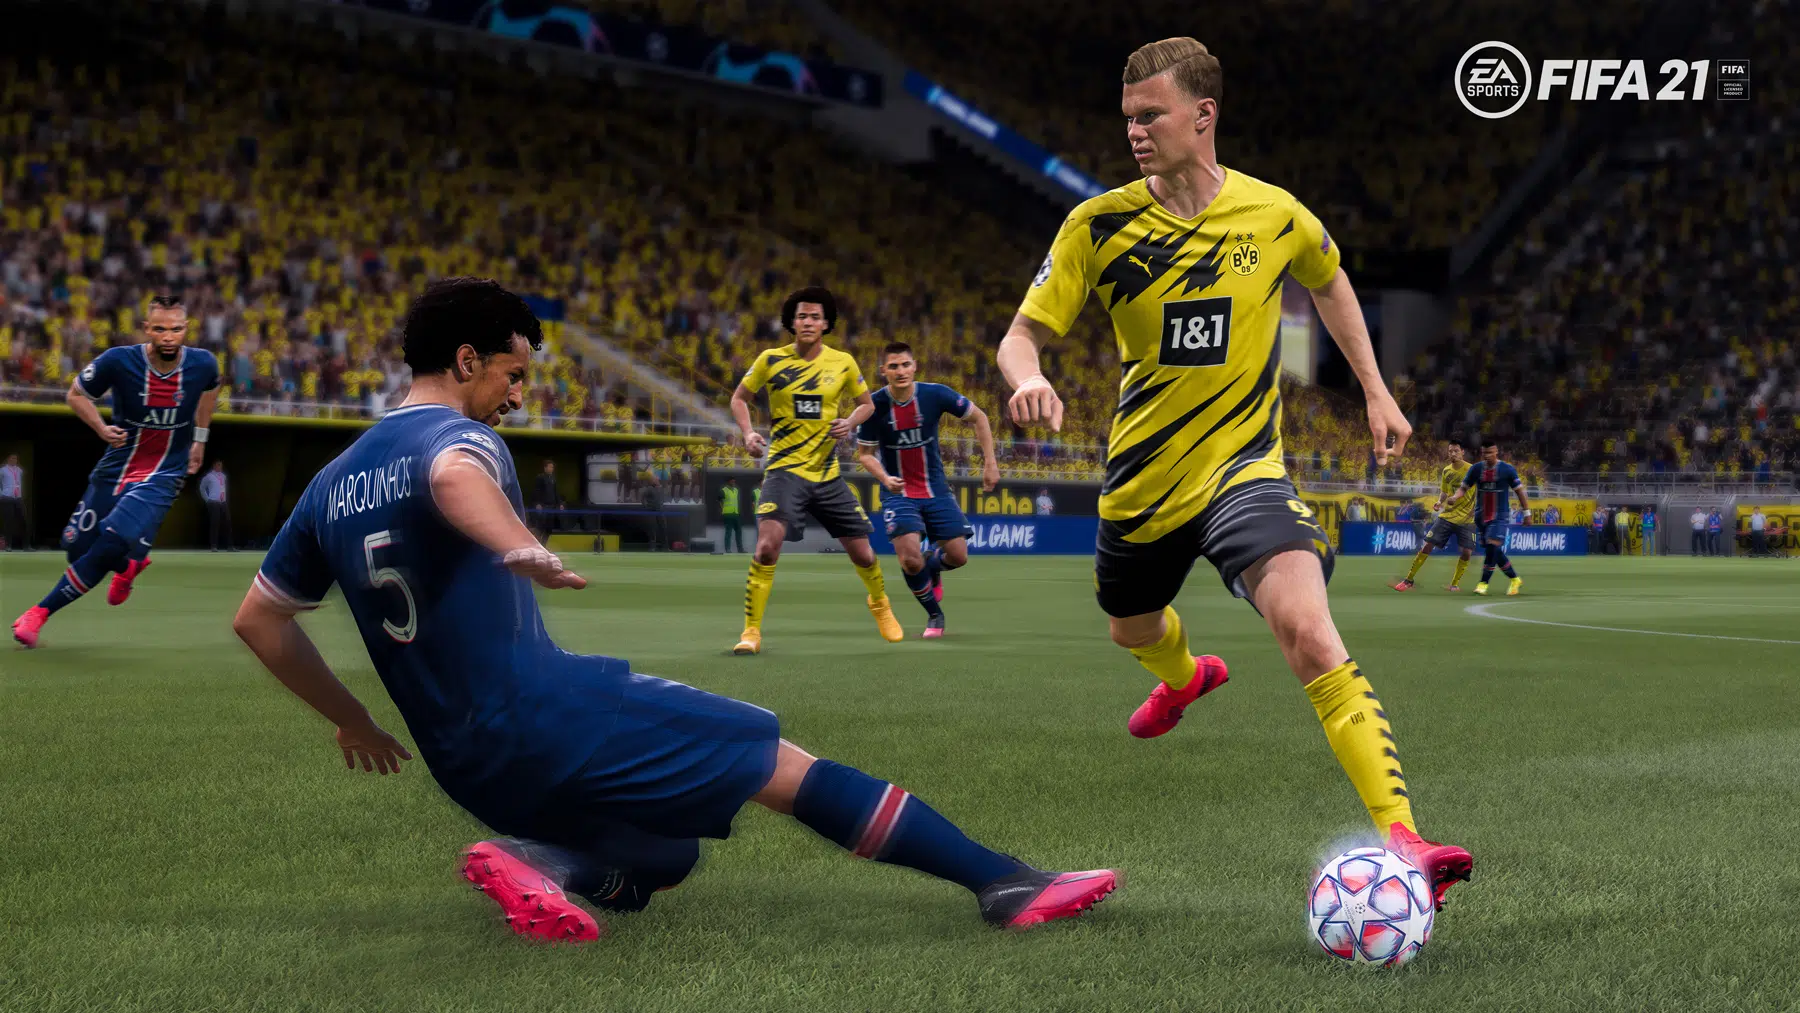 FIFA 21 Update 1.16 March 4